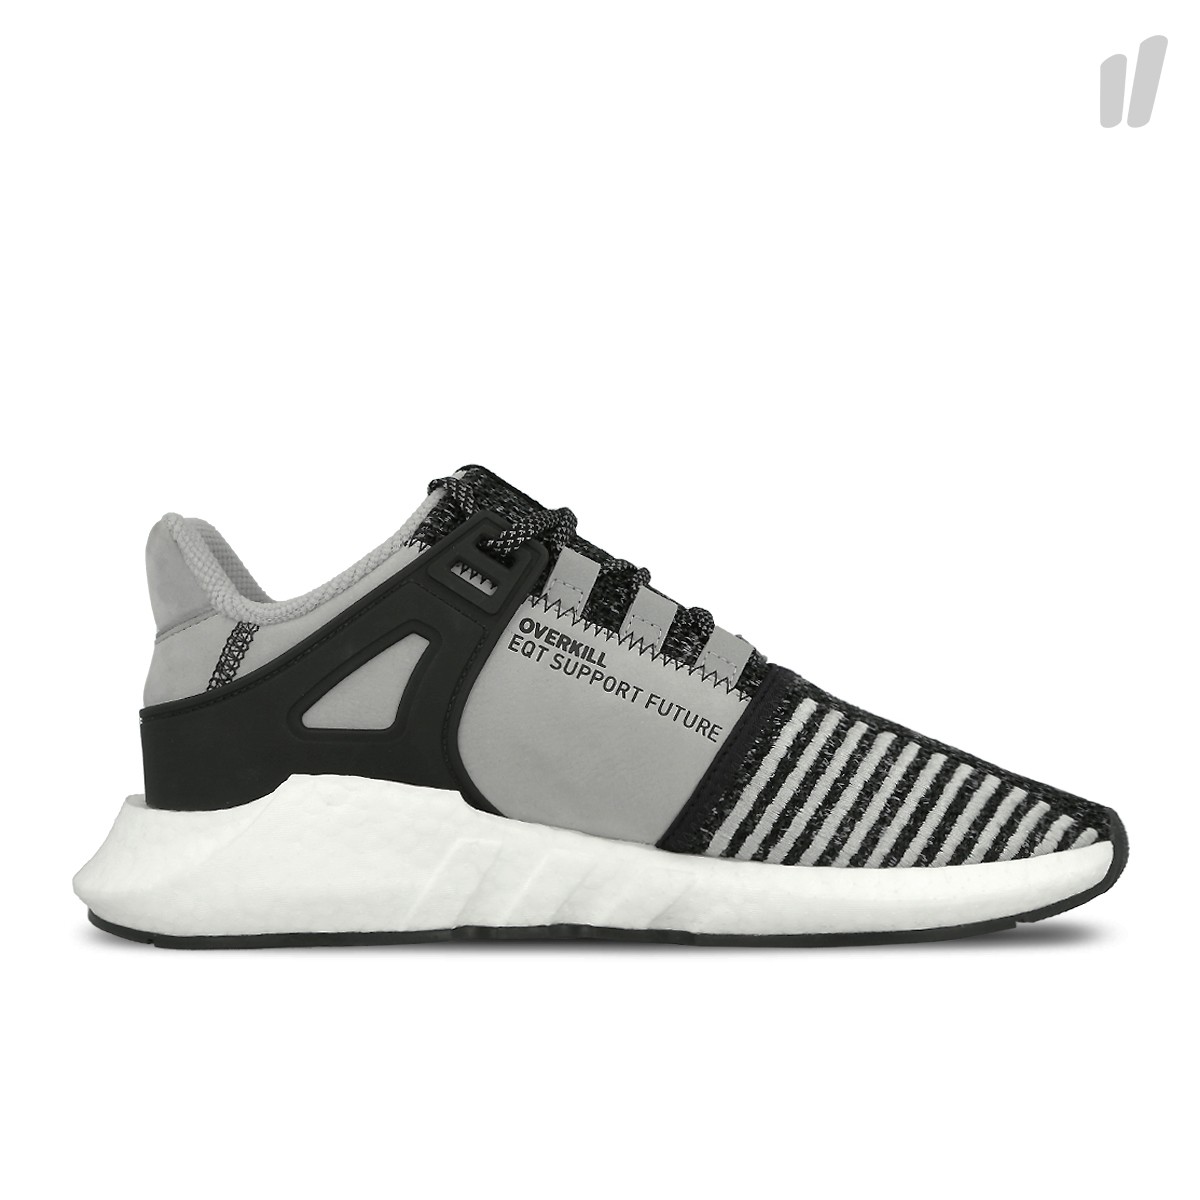 Adidas x Overkill
EQT Support Future
Core Black / Scarlet / White